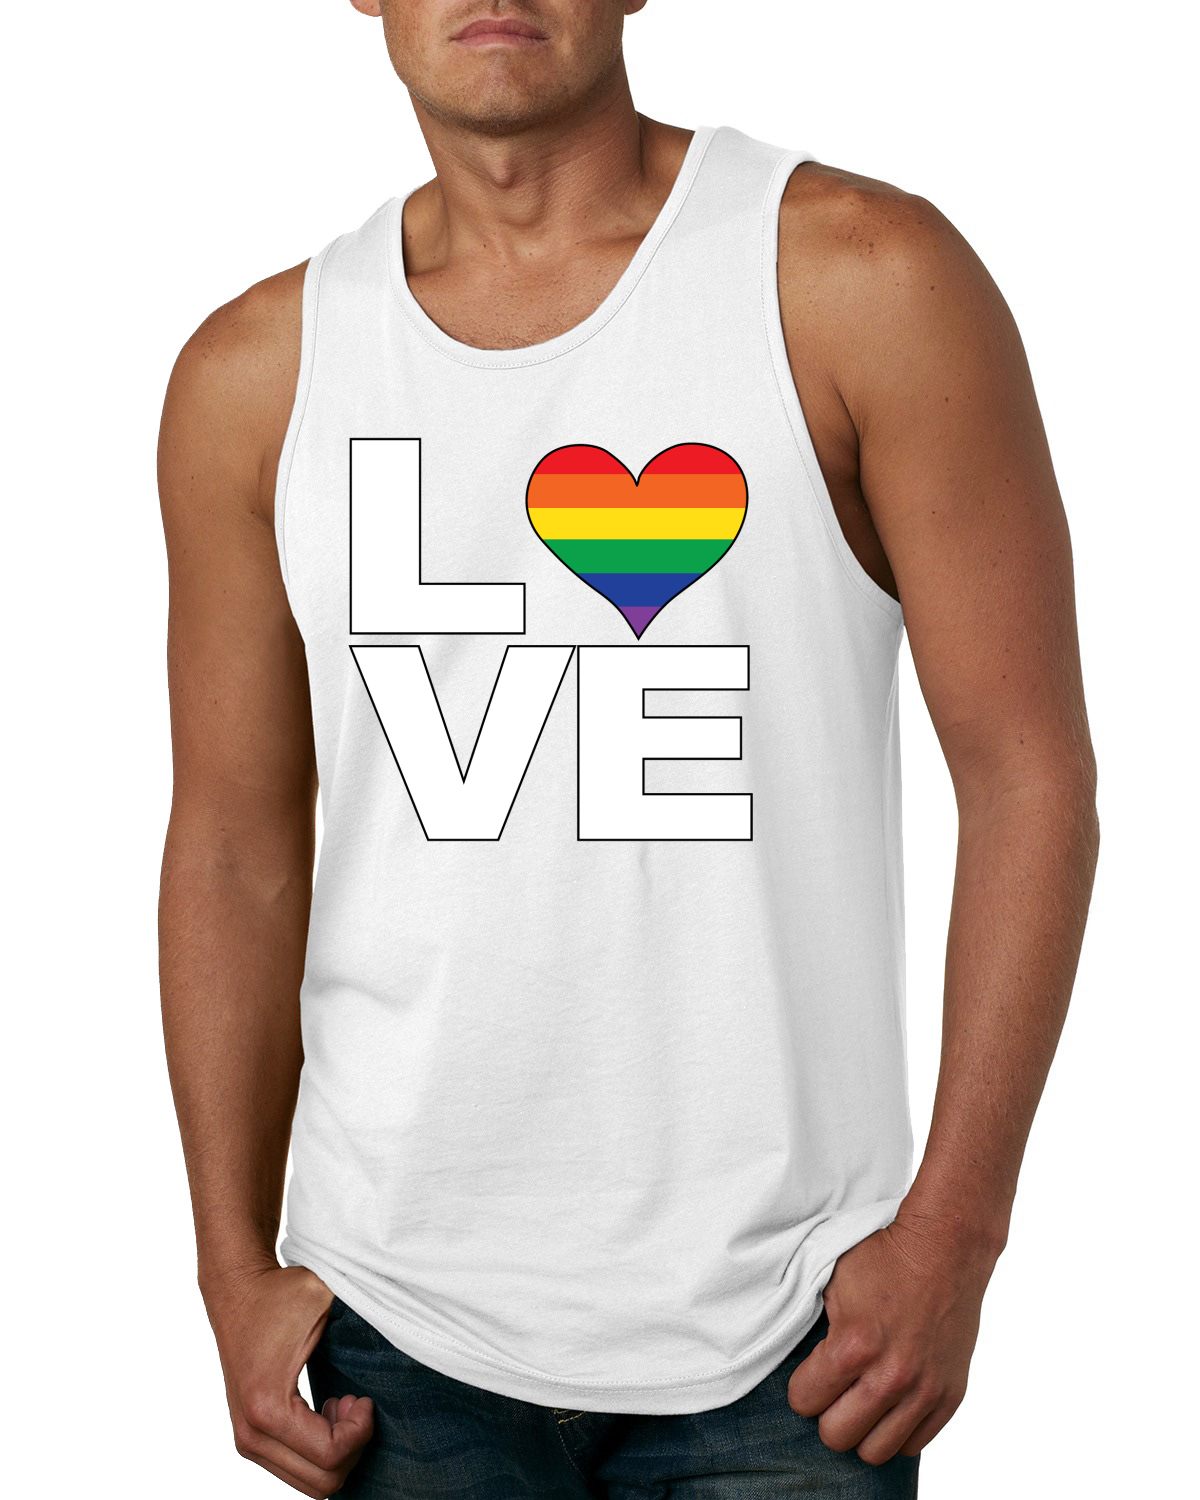 LOVE Heart Mens LGBT Pride Tank Top Gay Muscle Shirt | eBay